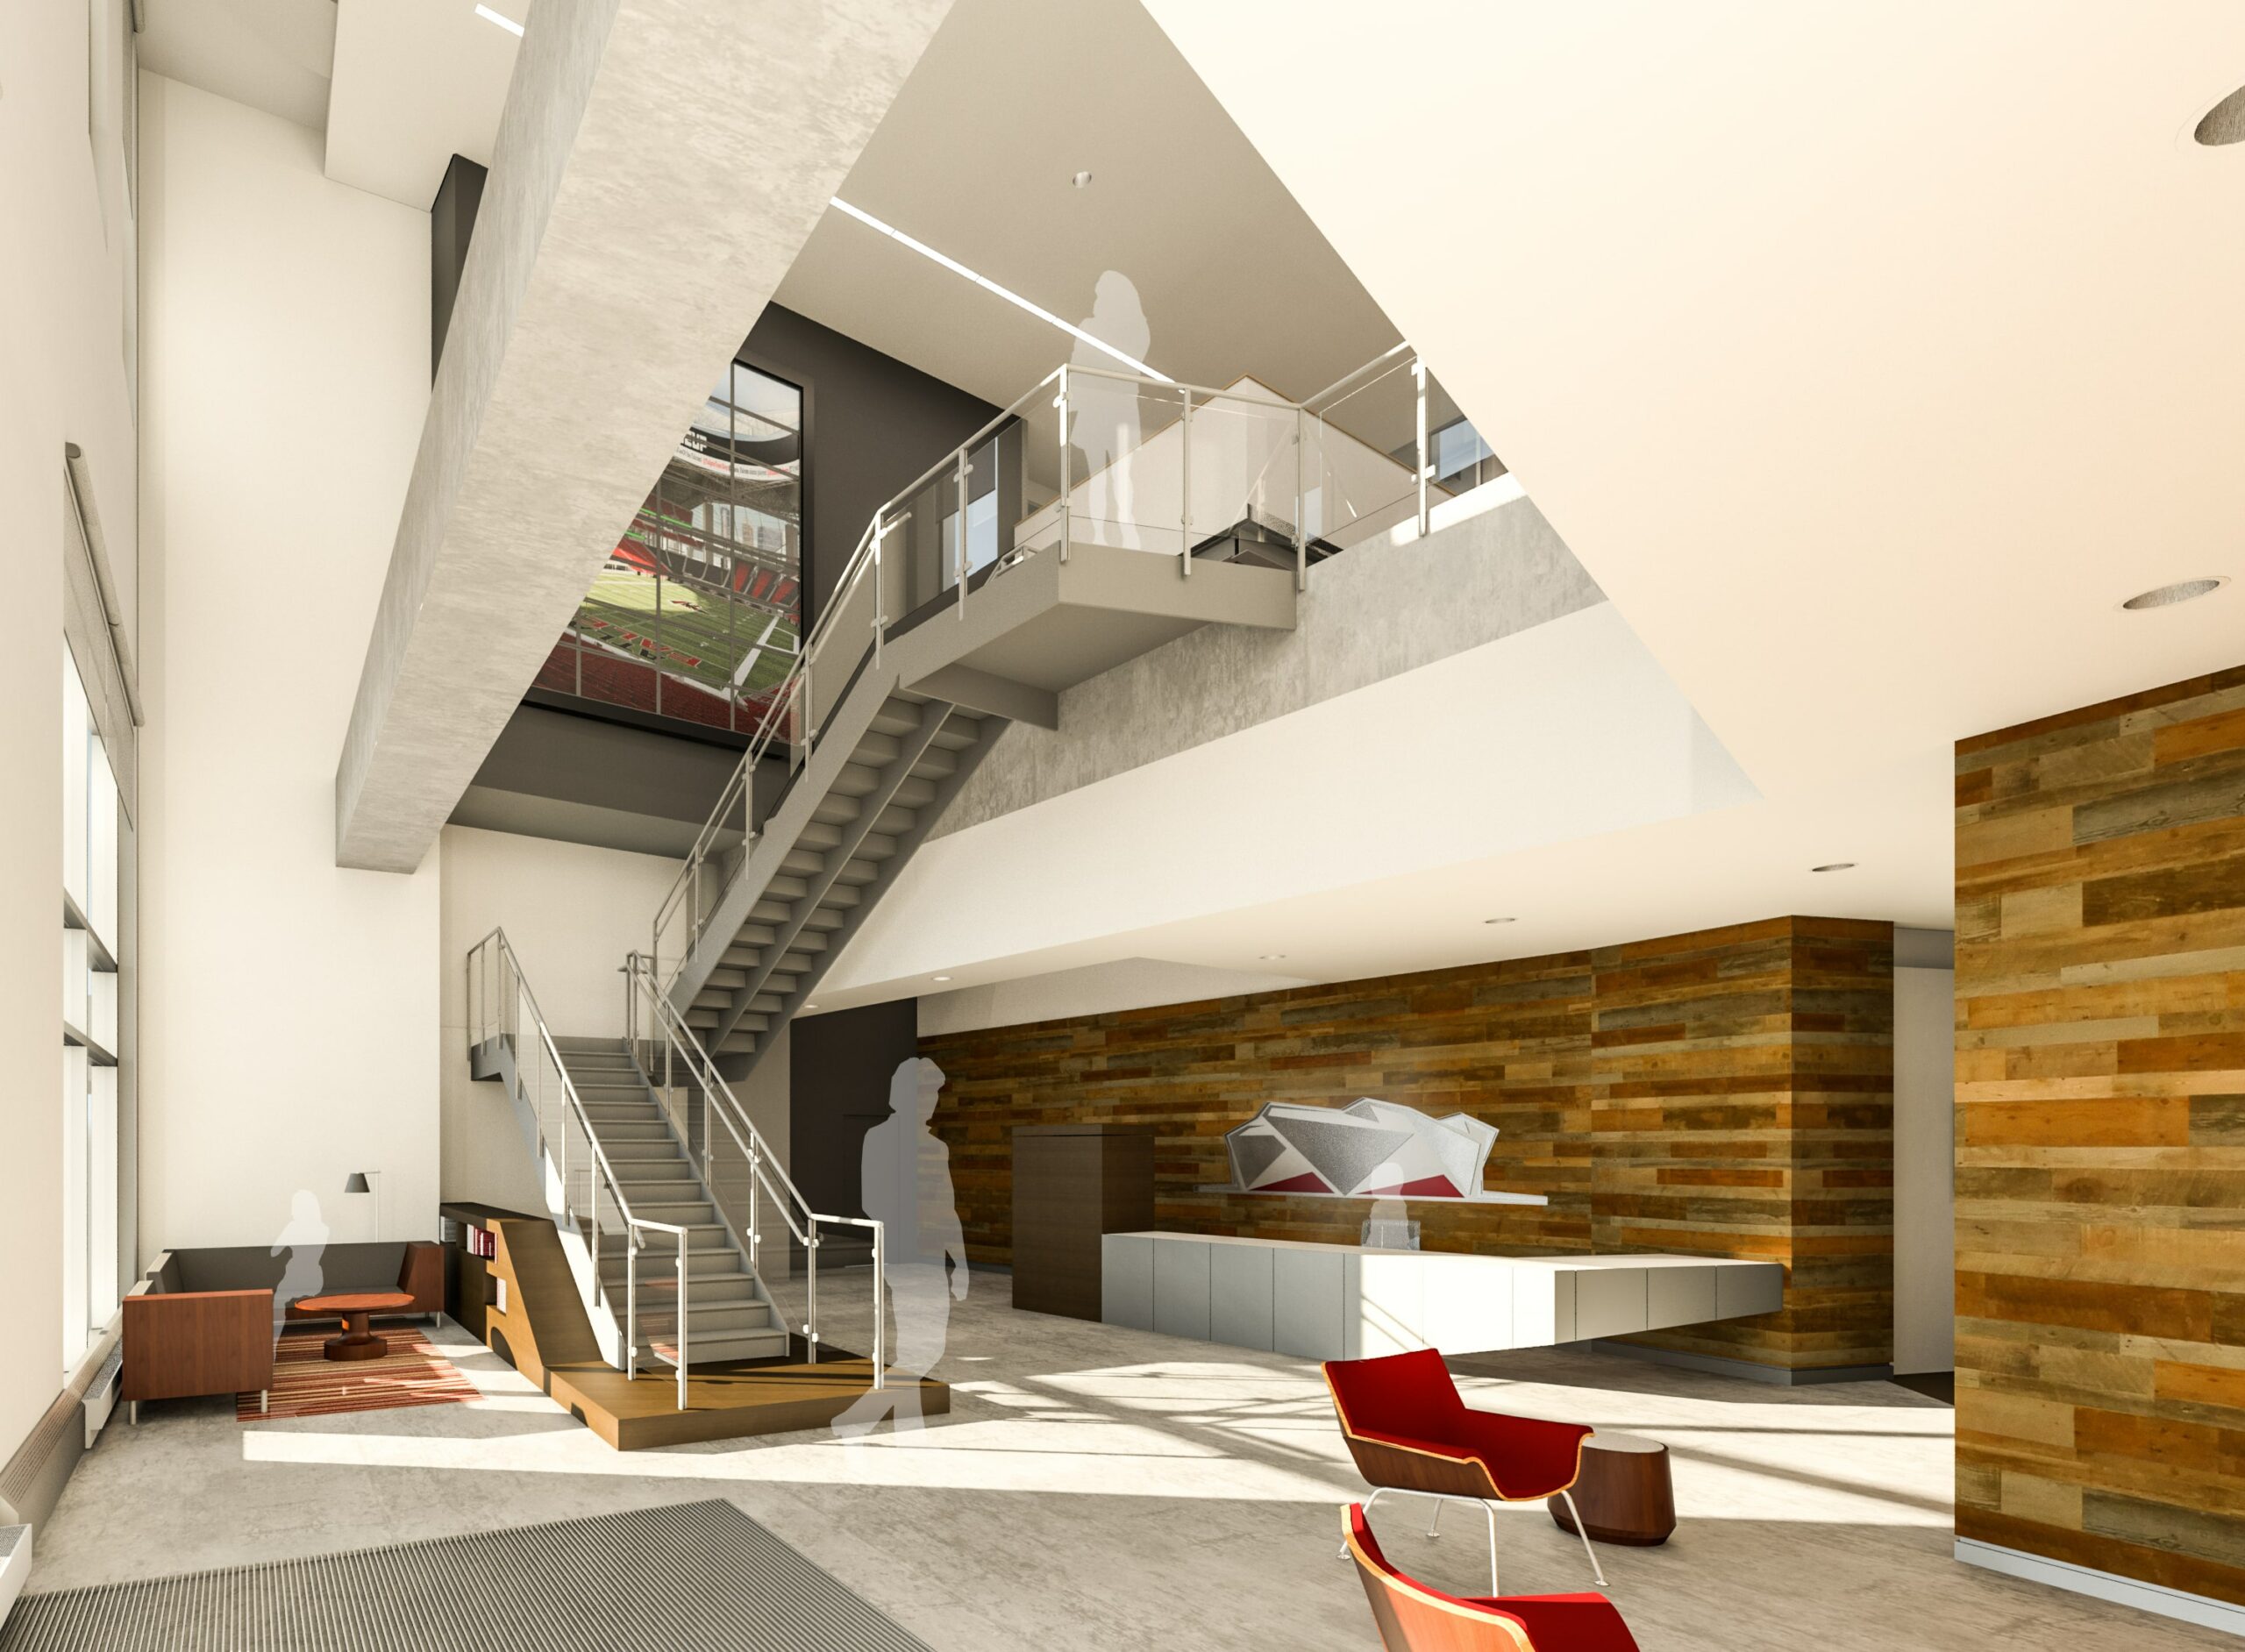 Atlanta Falcons Corporate Offices Goode Van Slyke Architecture